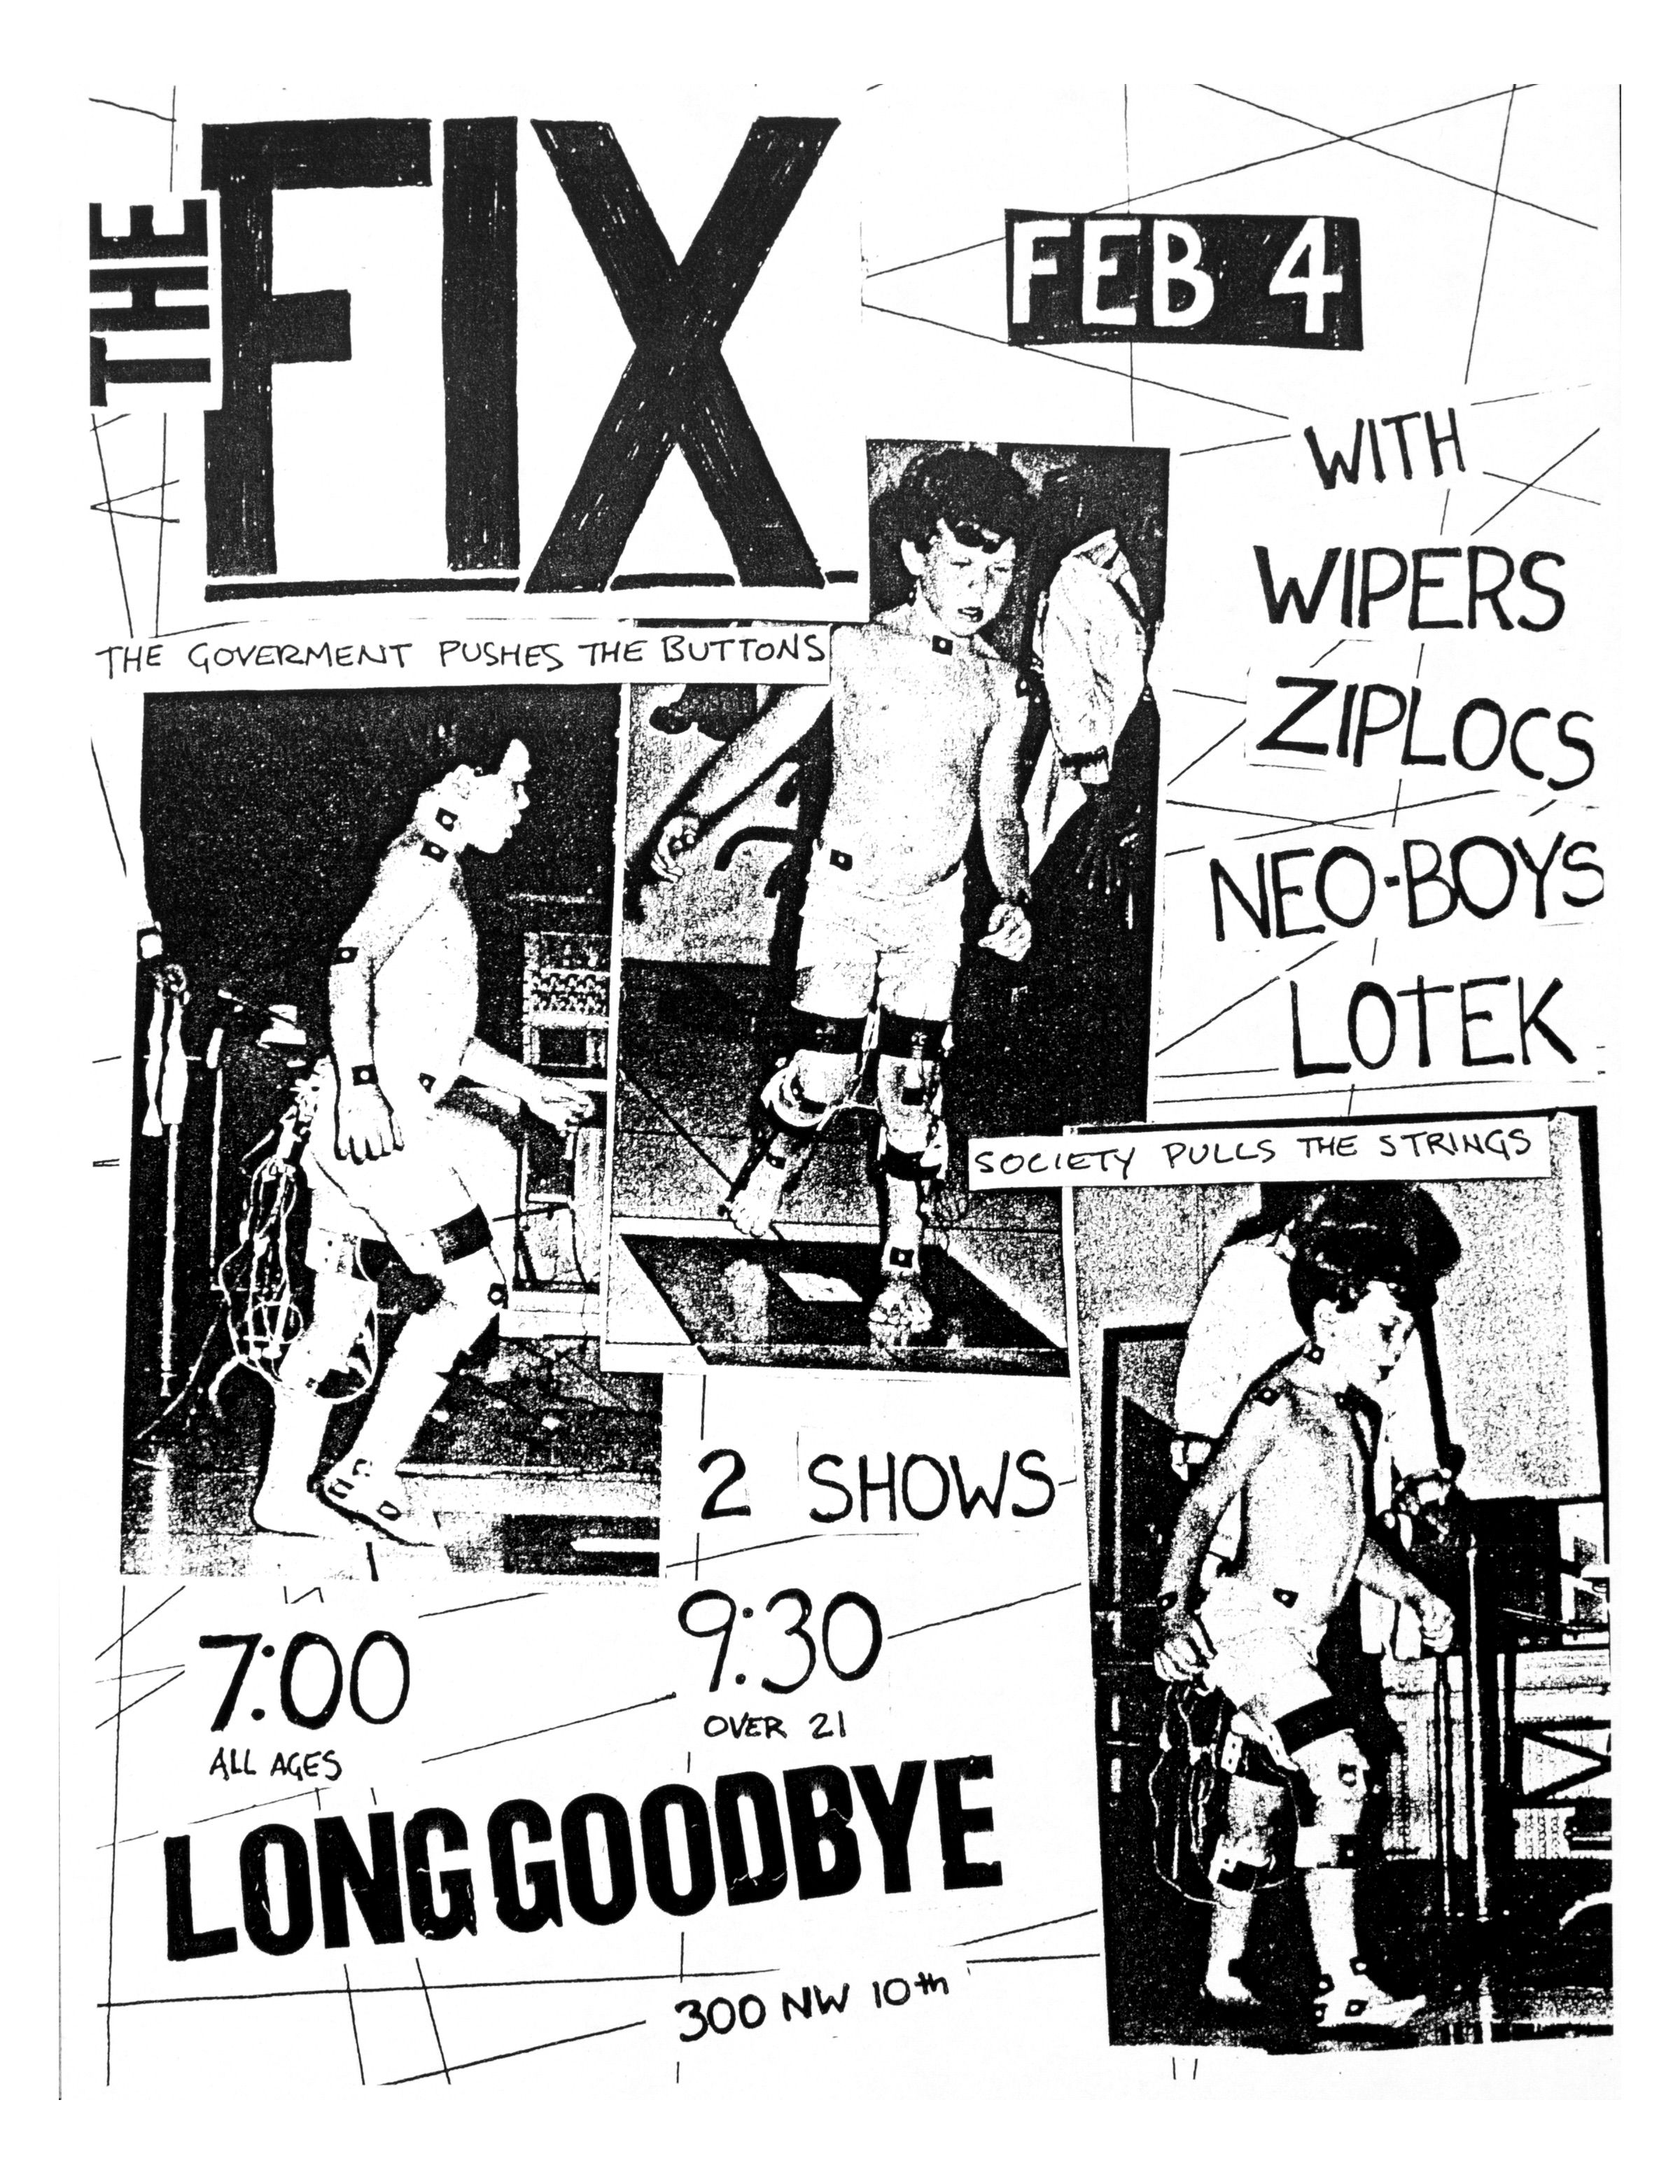 MXP-41.2 The Fix 1979 Long Goodbye Concert Poster